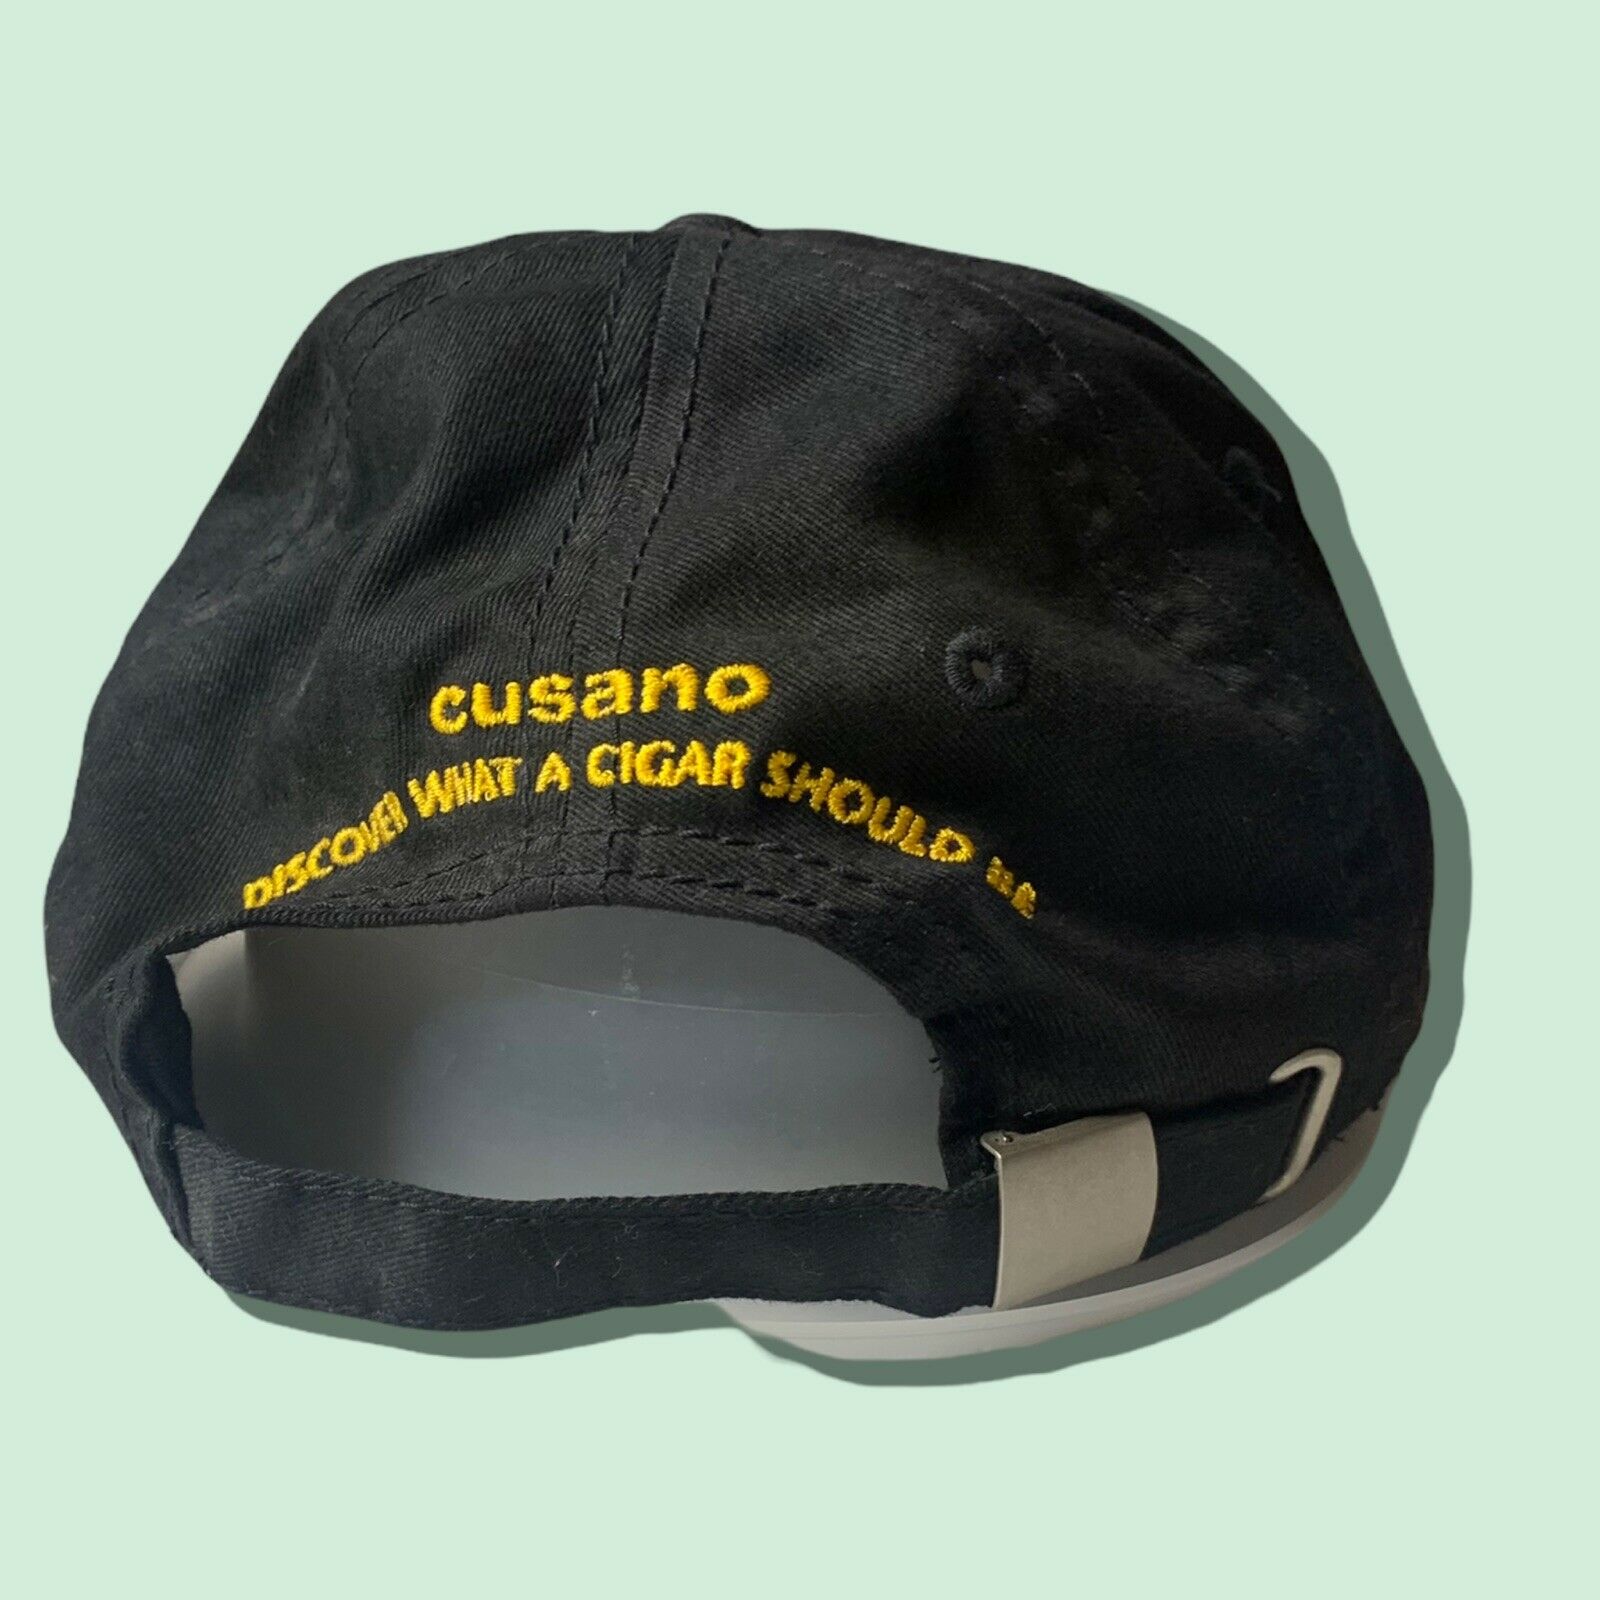 Cusano Cigars Black Baseball Cap Strapback Hat Black Discover Men OSFA By Sherry back